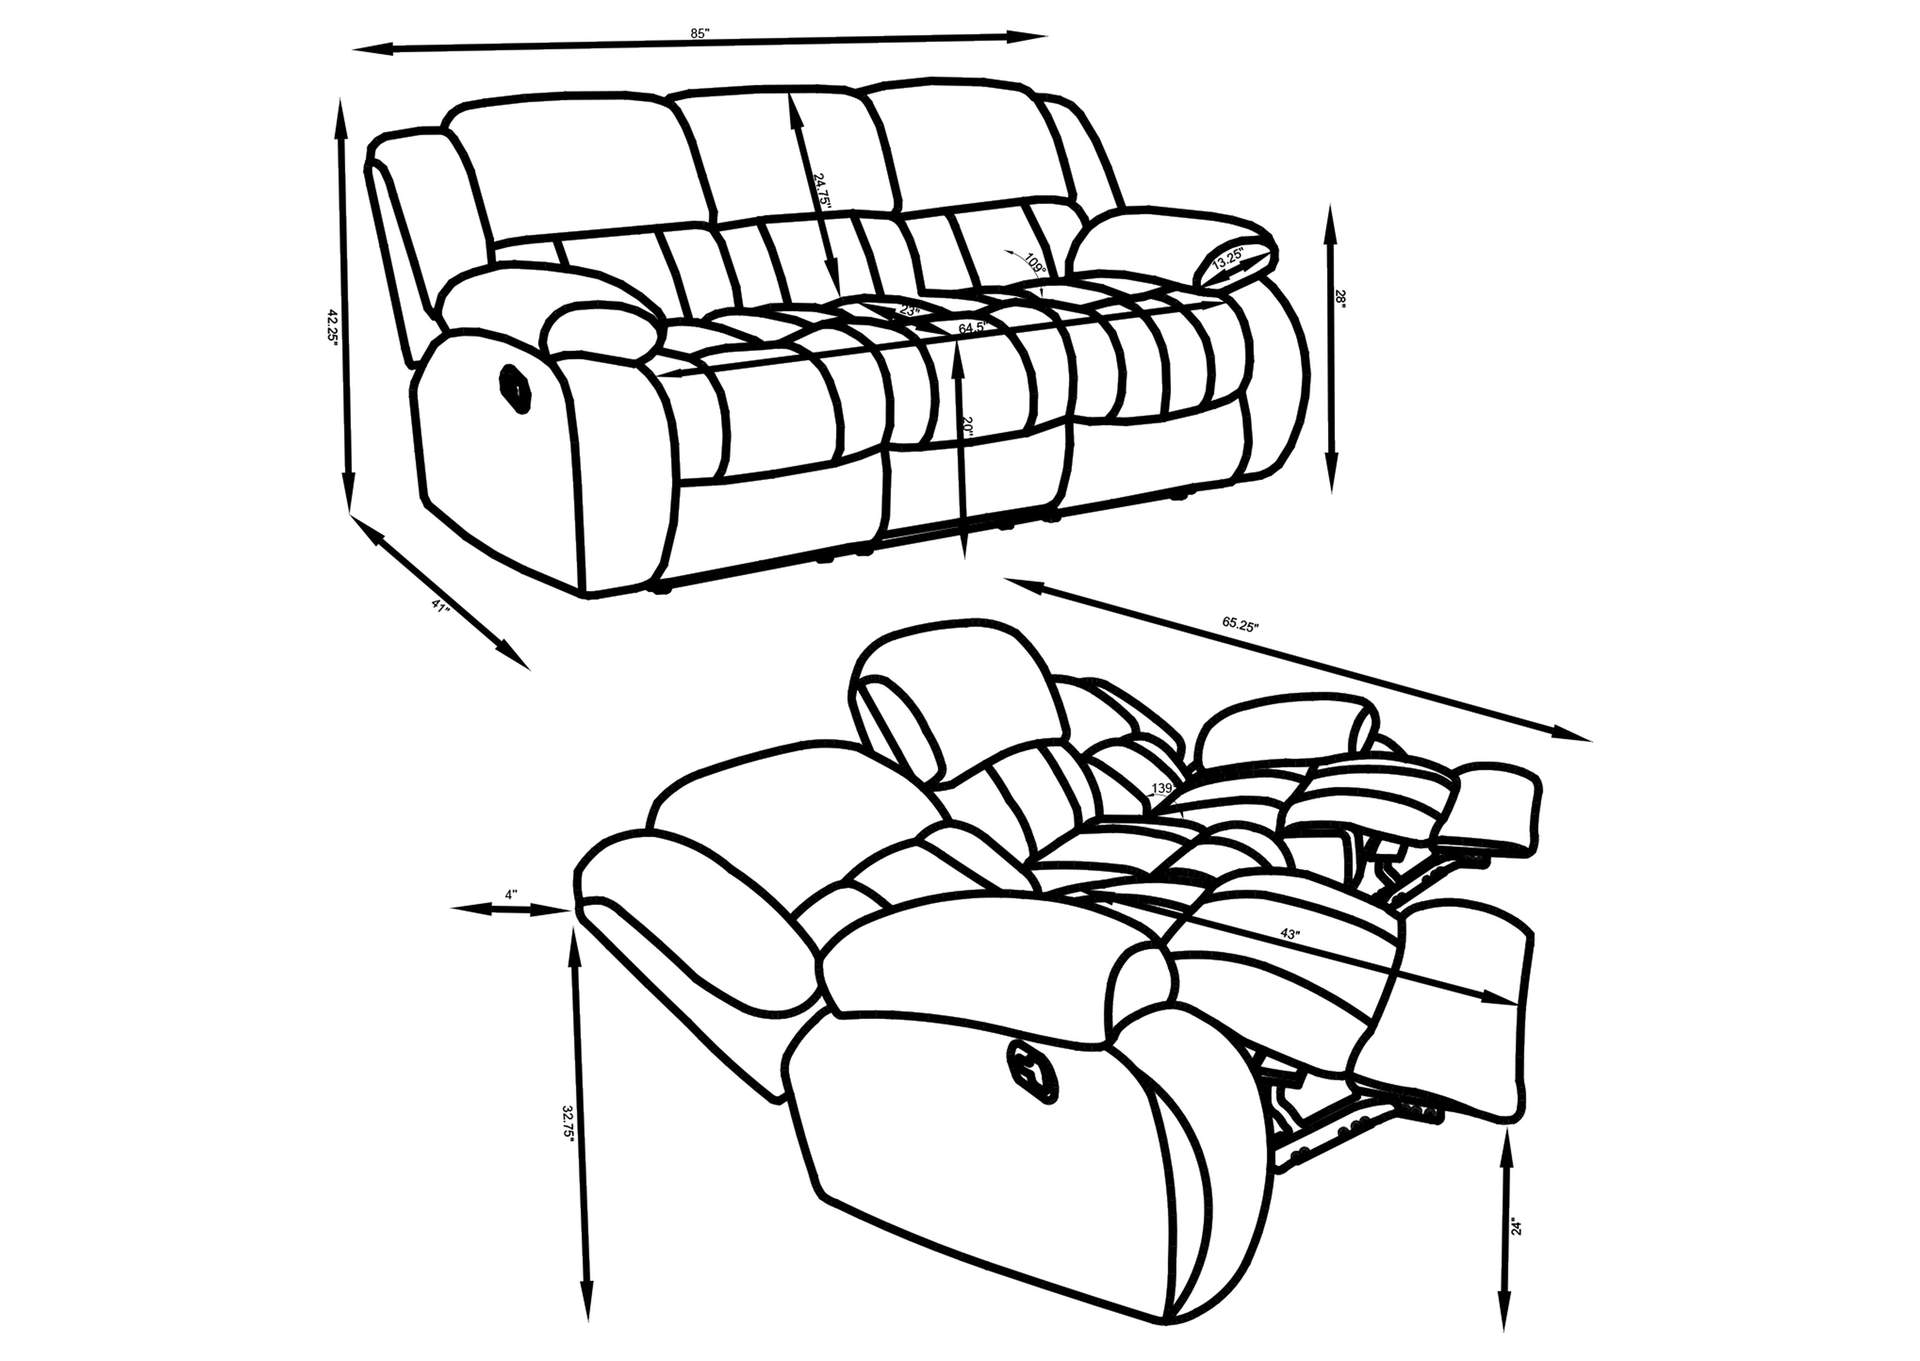 Weissman Pillow Top Arm Motion Sofa Charcoal,Coaster Furniture